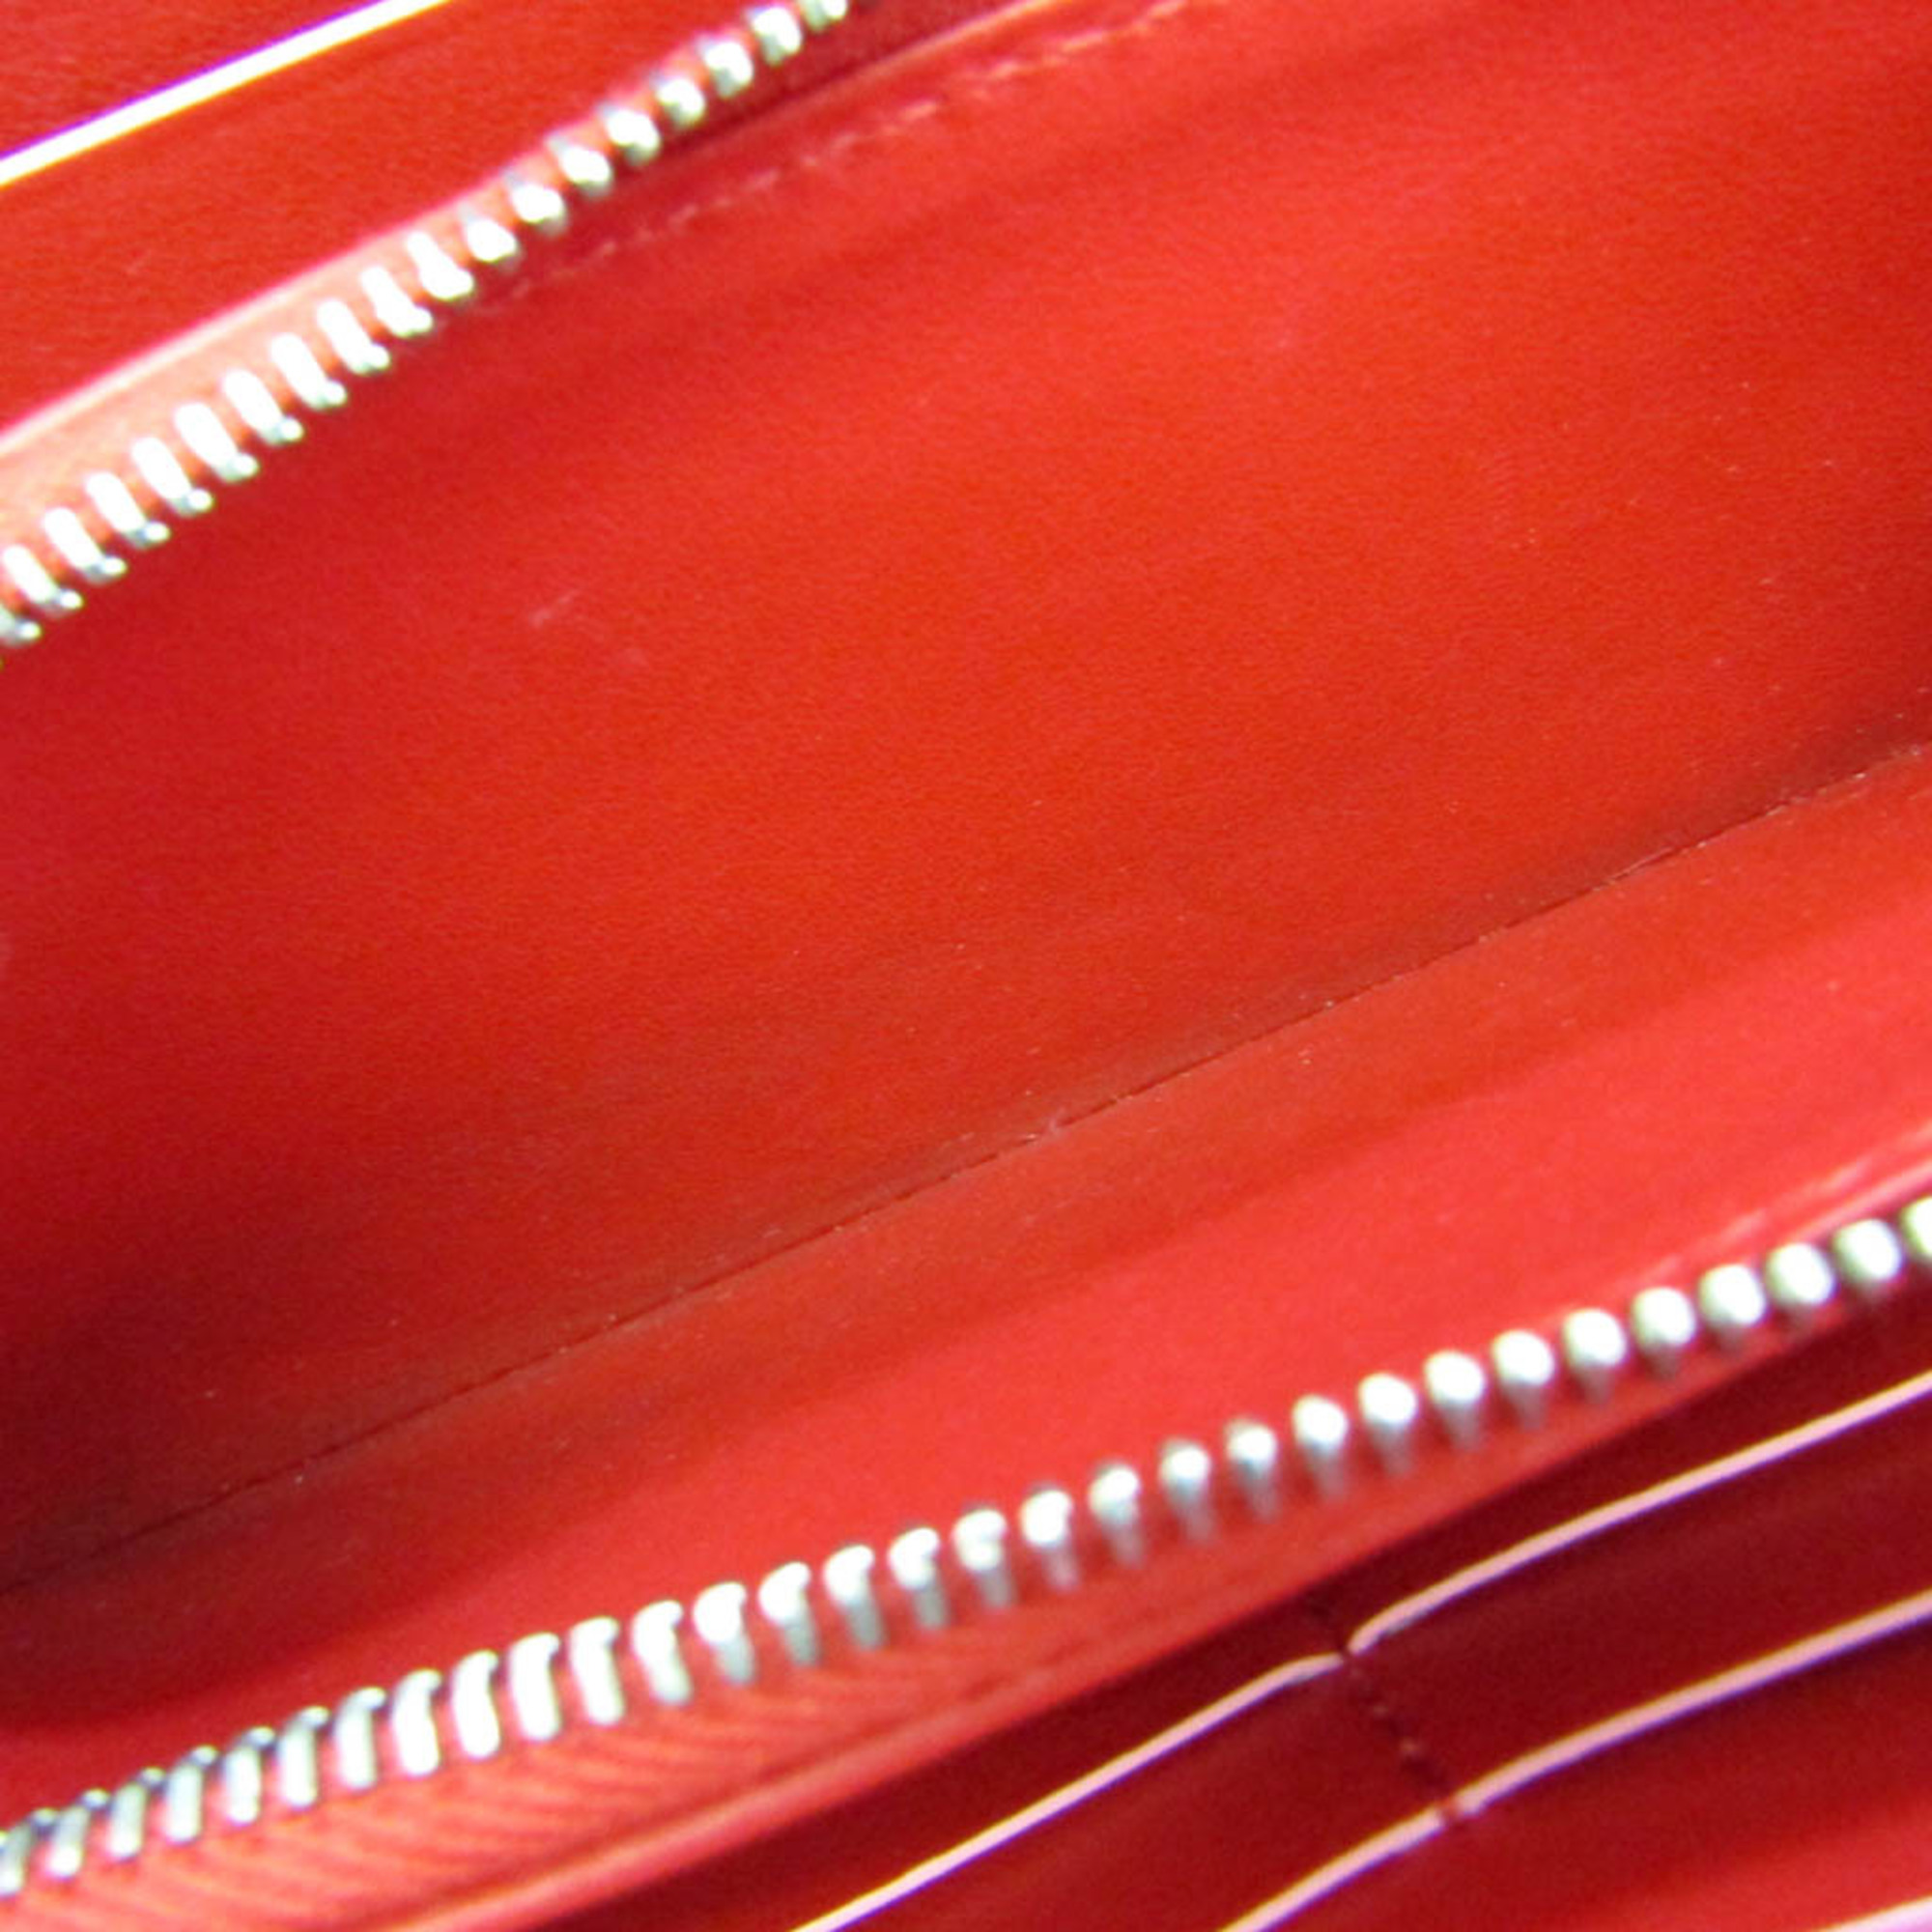 Bottega Veneta Intrecciato 577775 Women's Leather Long Wallet (bi-fold) Pink,Red Color